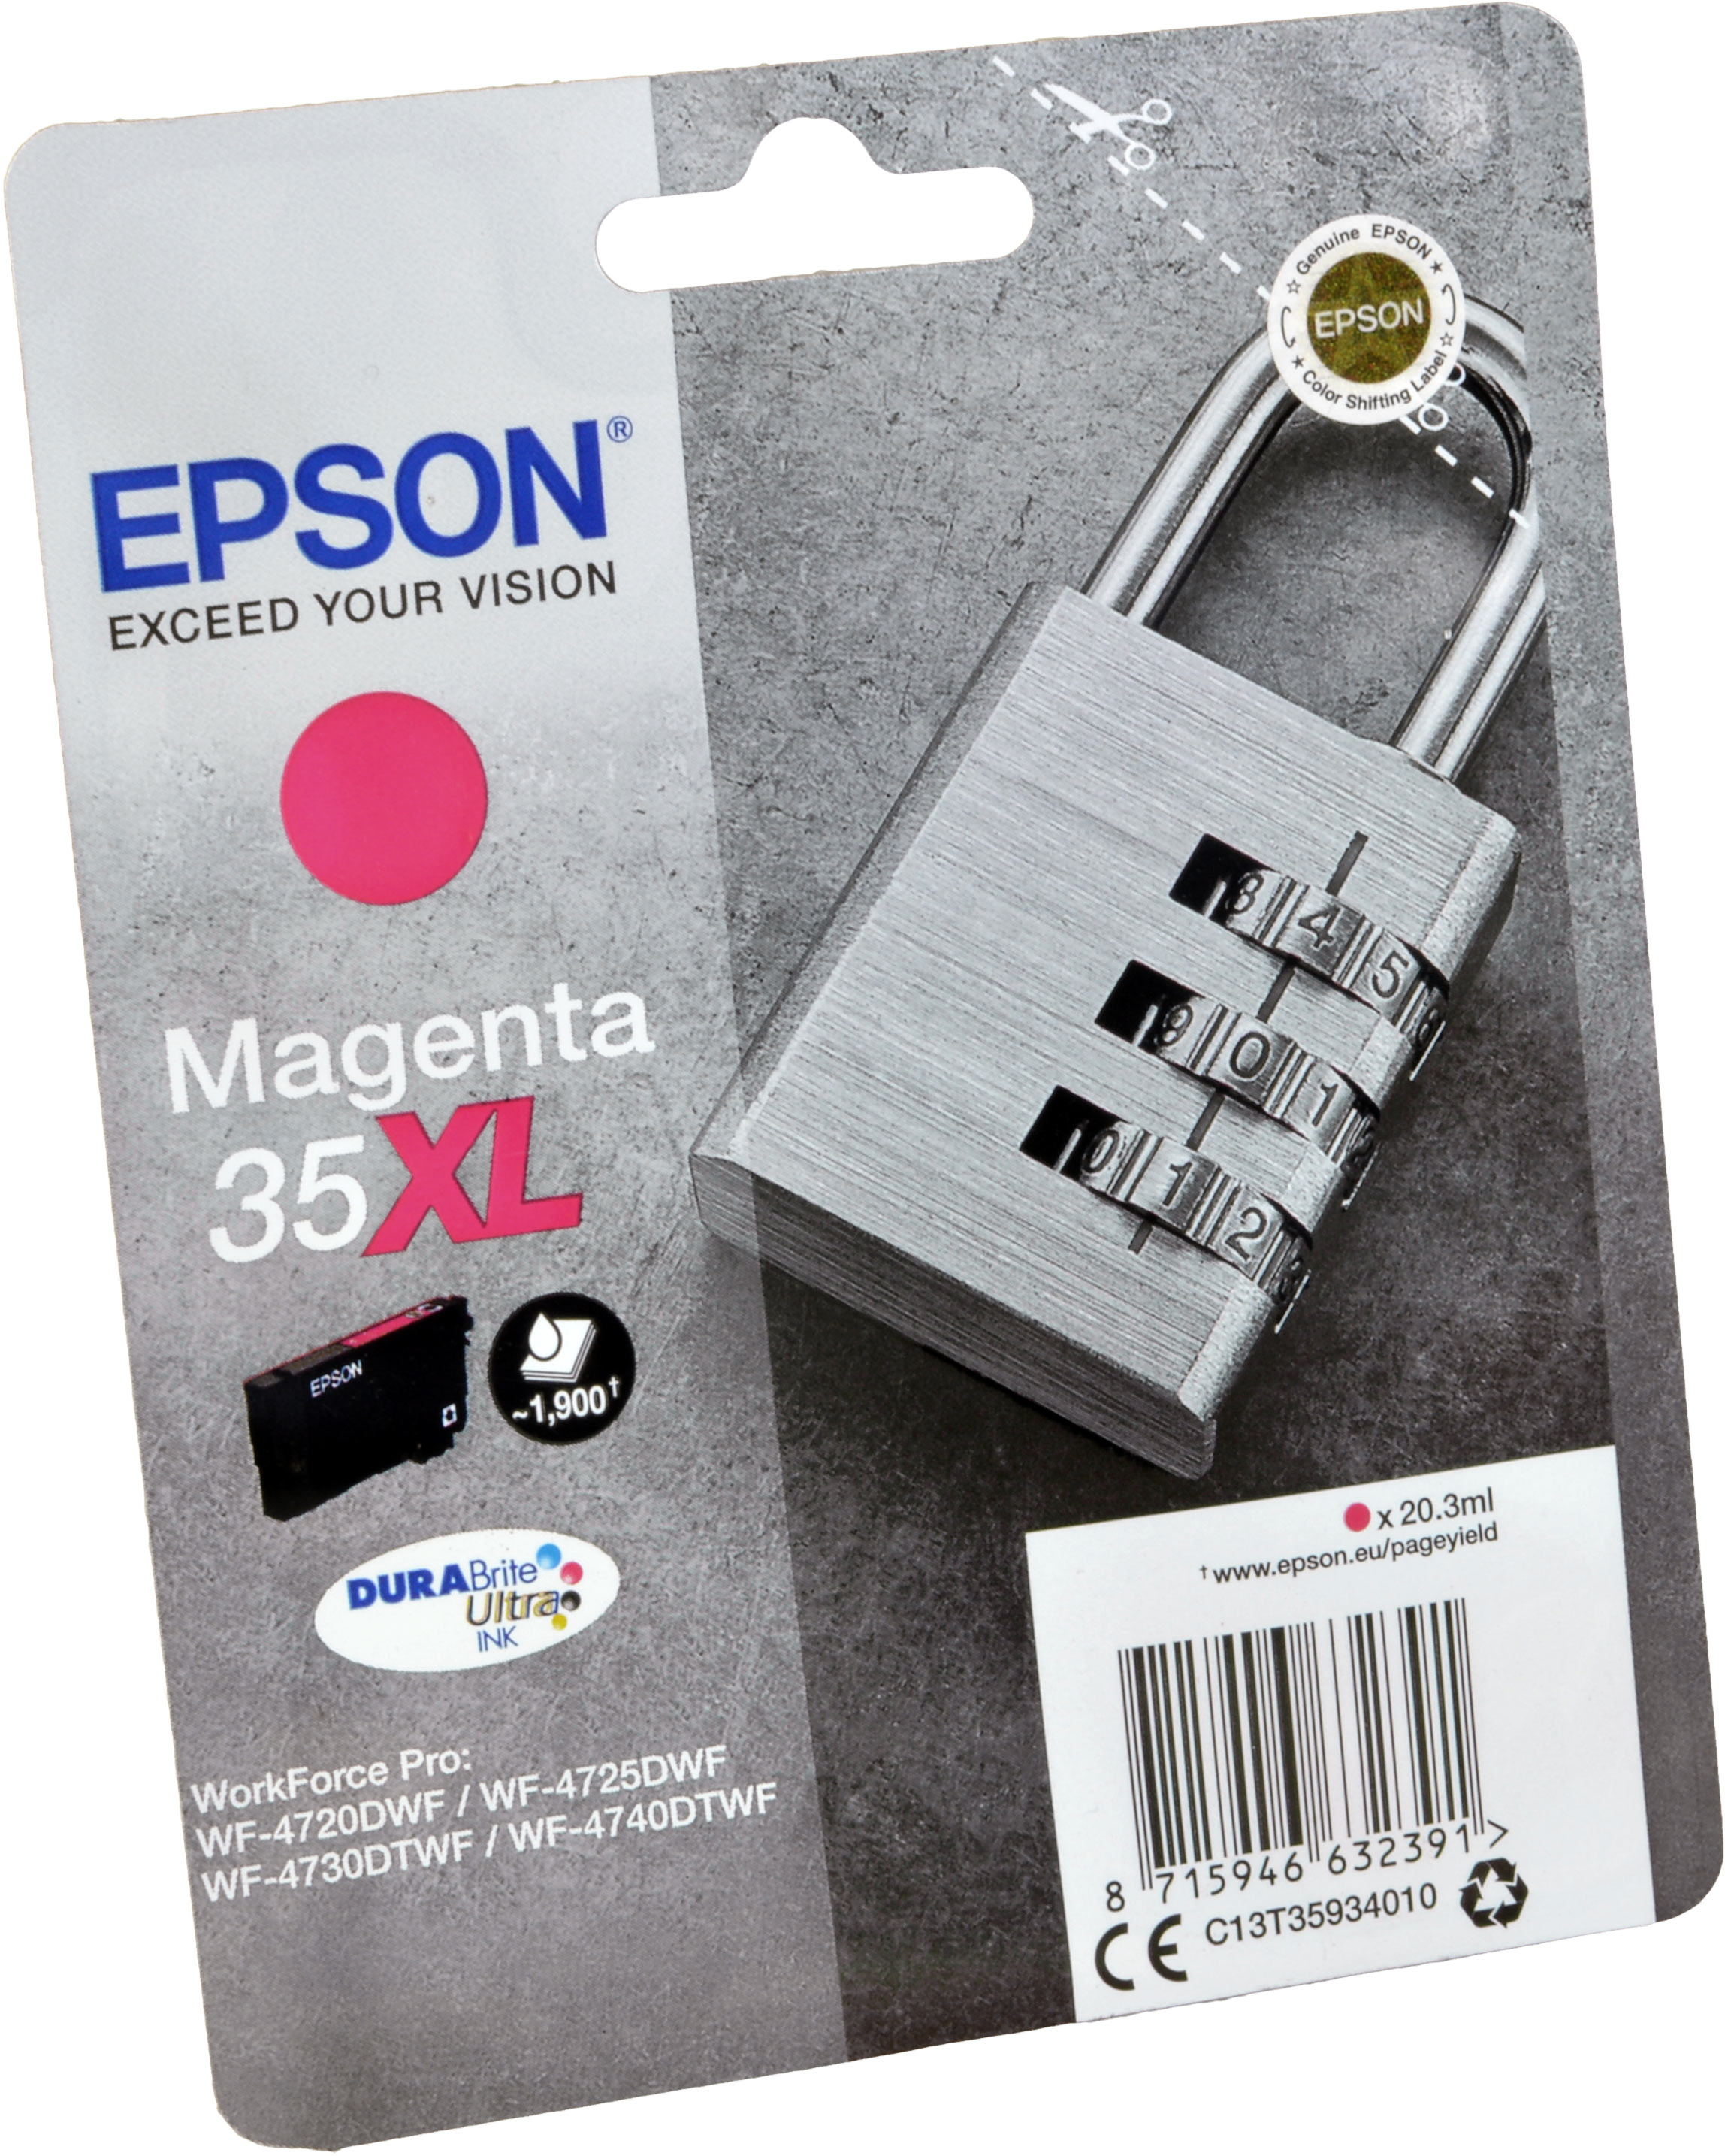 Epson Tinte C13T35934010 Magenta 35XL  magenta